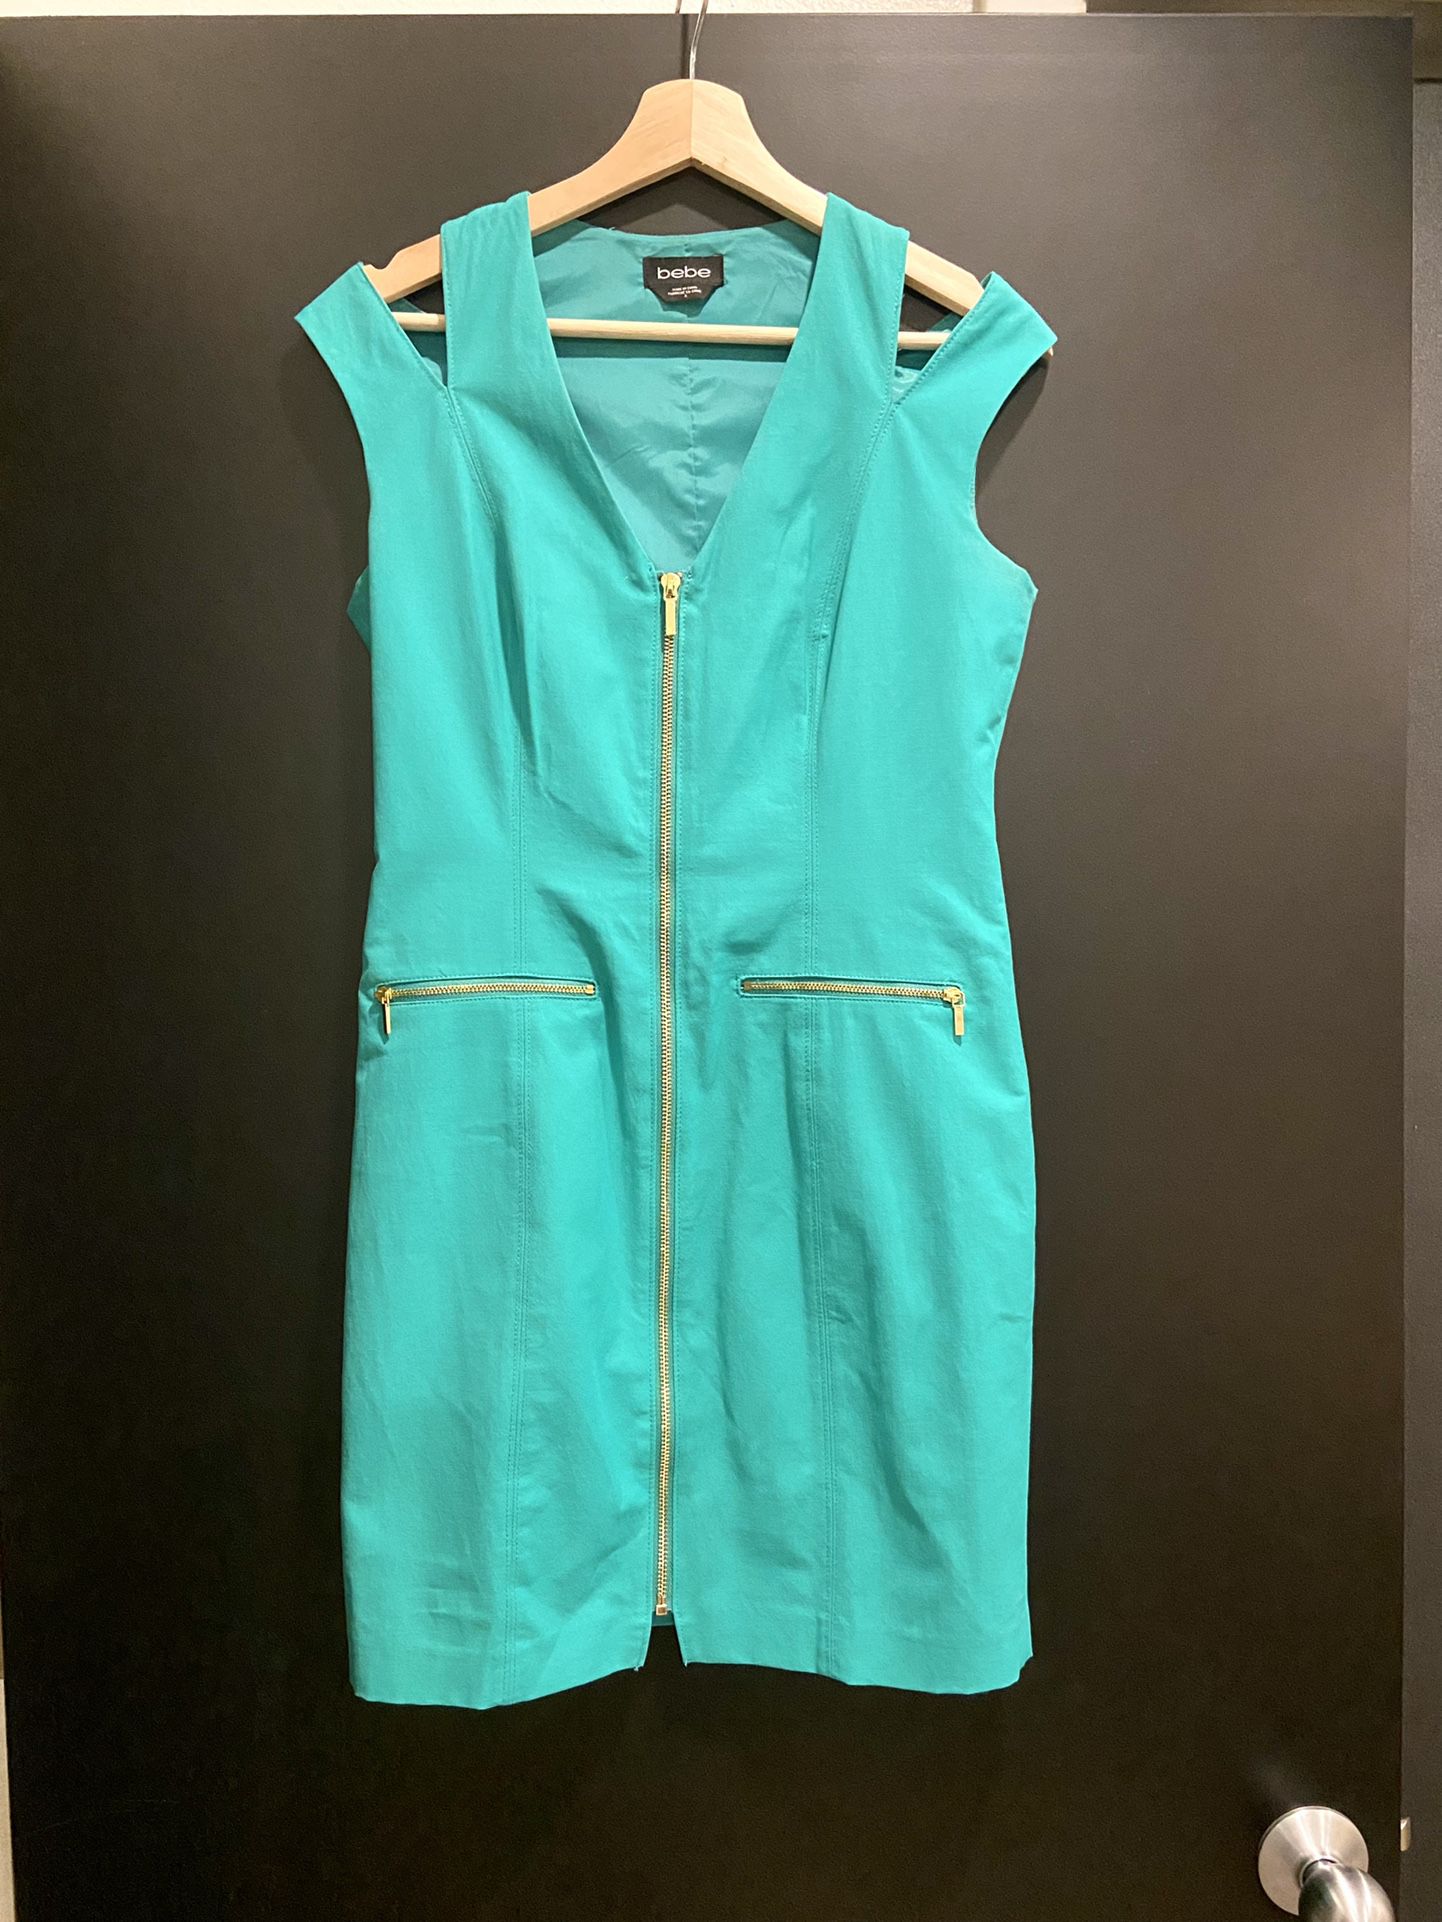 Bebe Zip Up Turquoise Mini Dress (size 8)